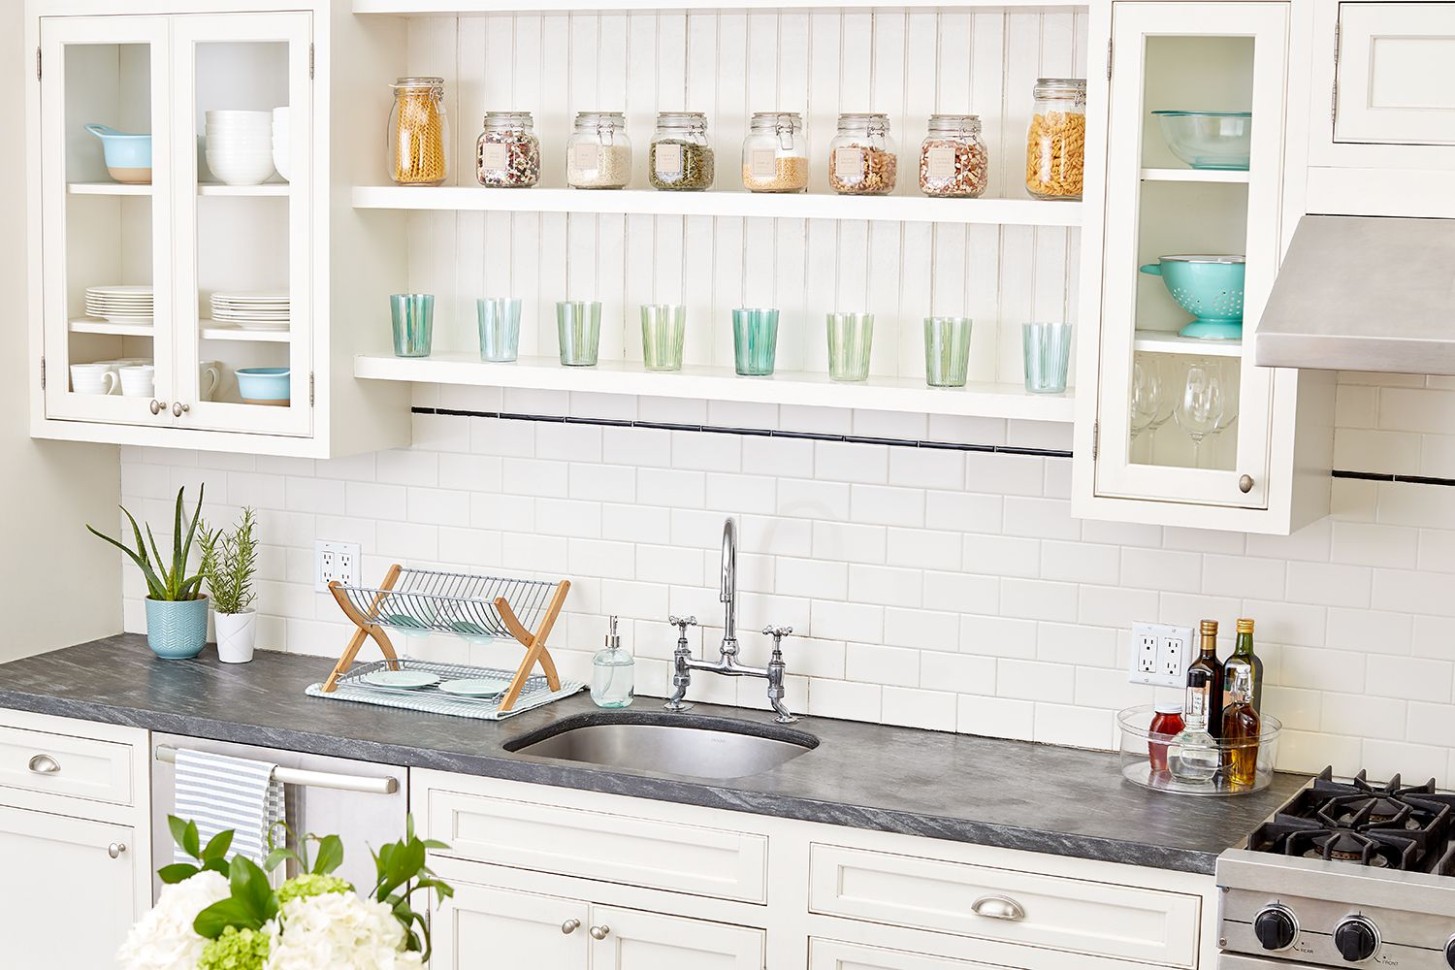 How to Organize Kitchen Cabinets - cupboards kitchen